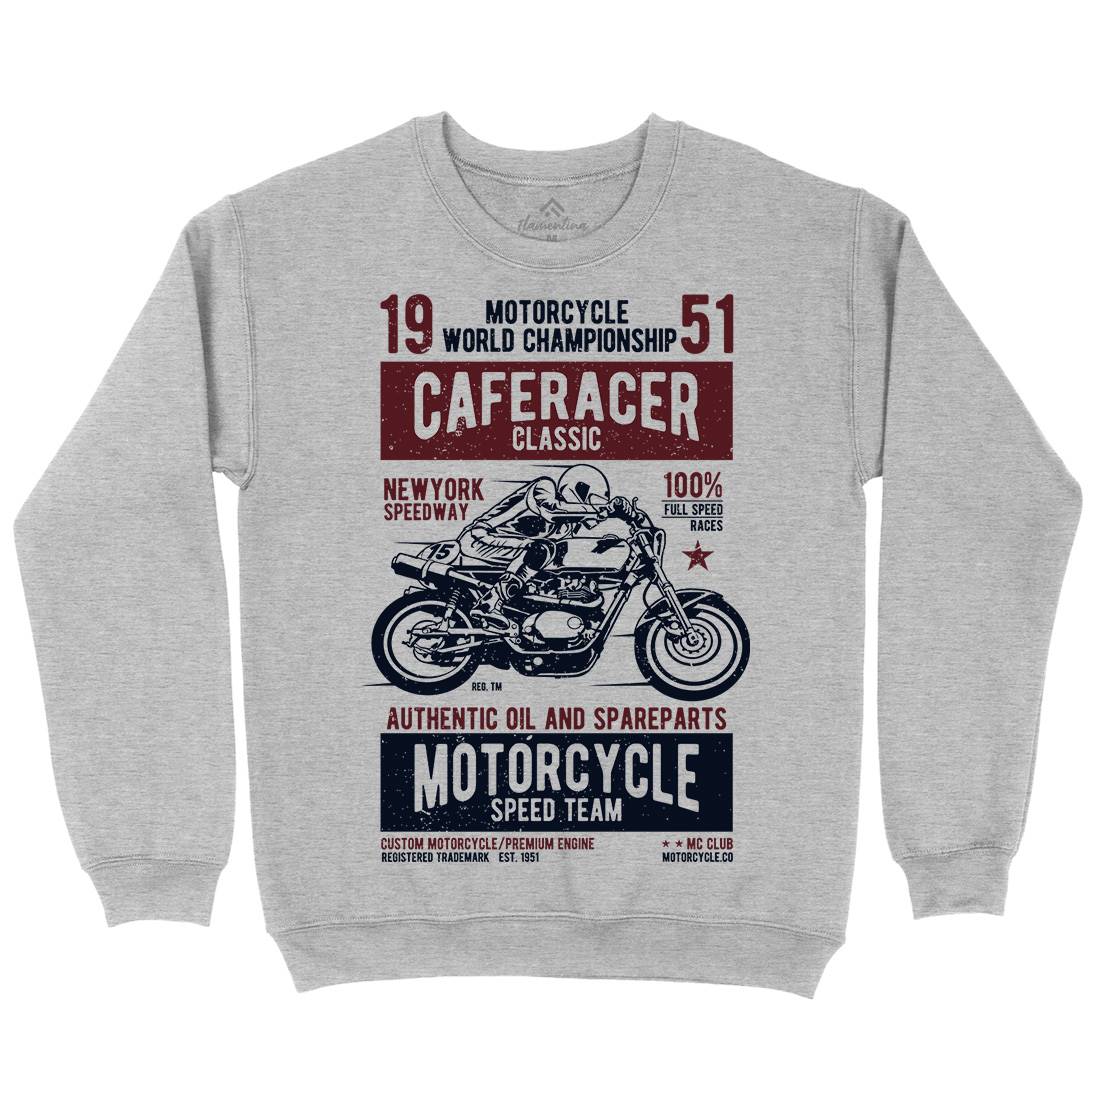 Caferacer Kids Crew Neck Sweatshirt Motorcycles A629